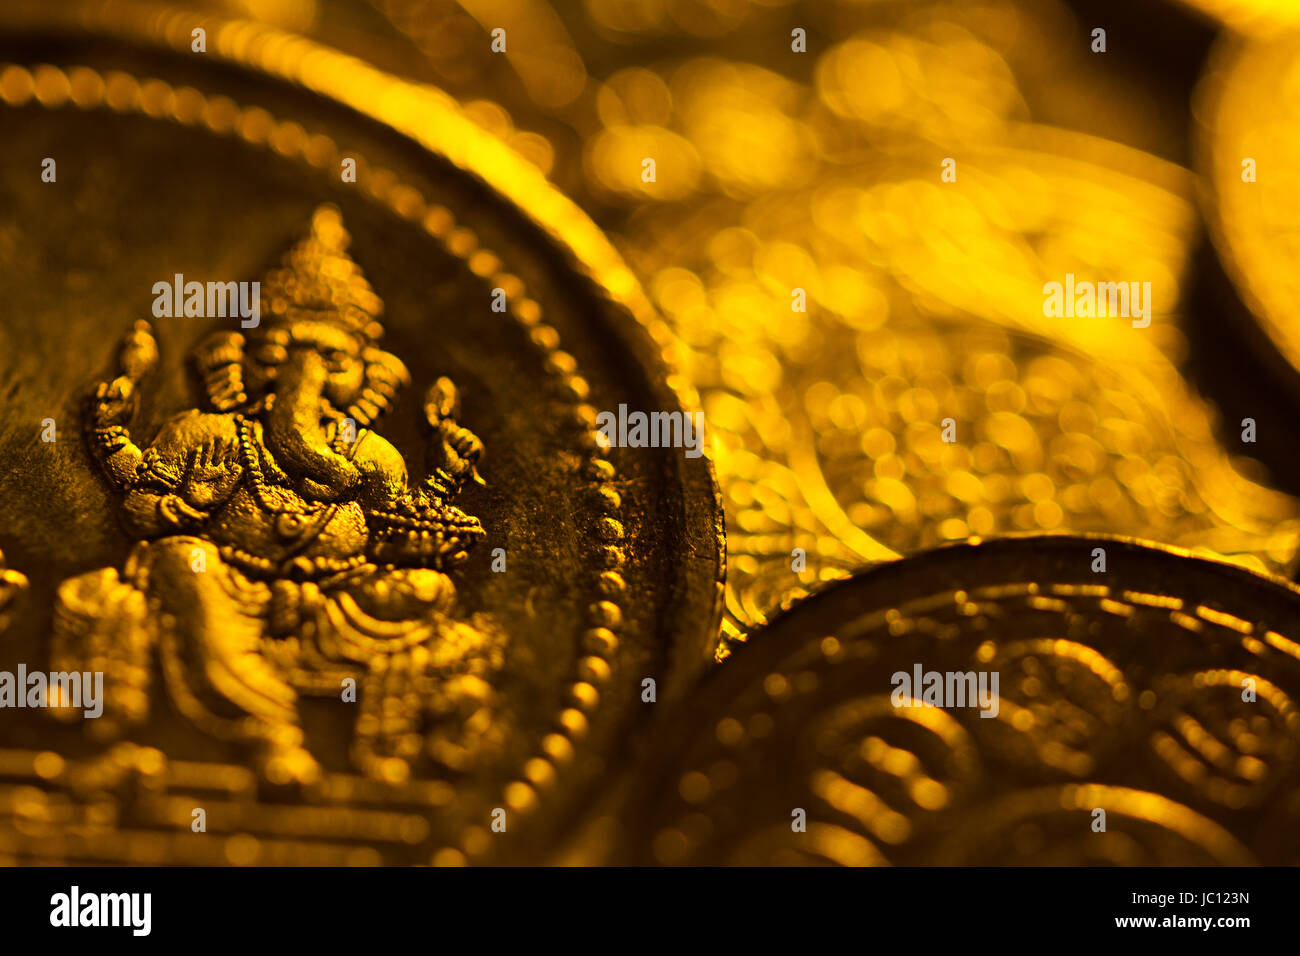 Close-Up India Festival .Deepavali Abundance Silver Coin Ganapati Photo No-People Stock Photo